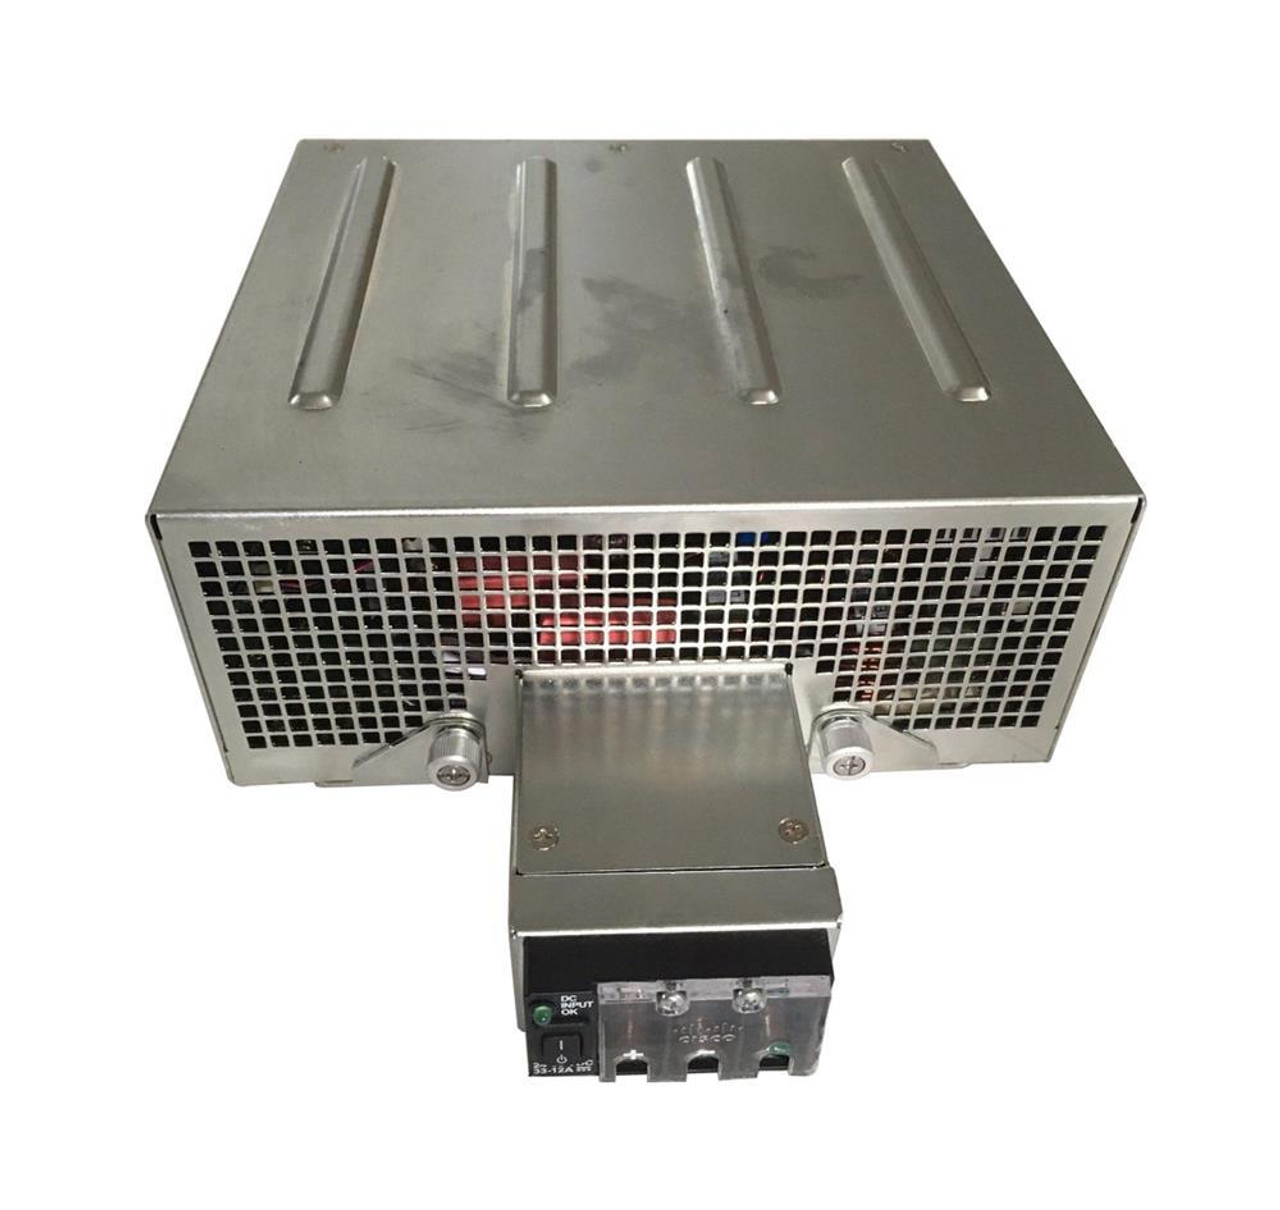 PWR-3900-DC= Cisco DC Power Supply Internal (Refurbished)